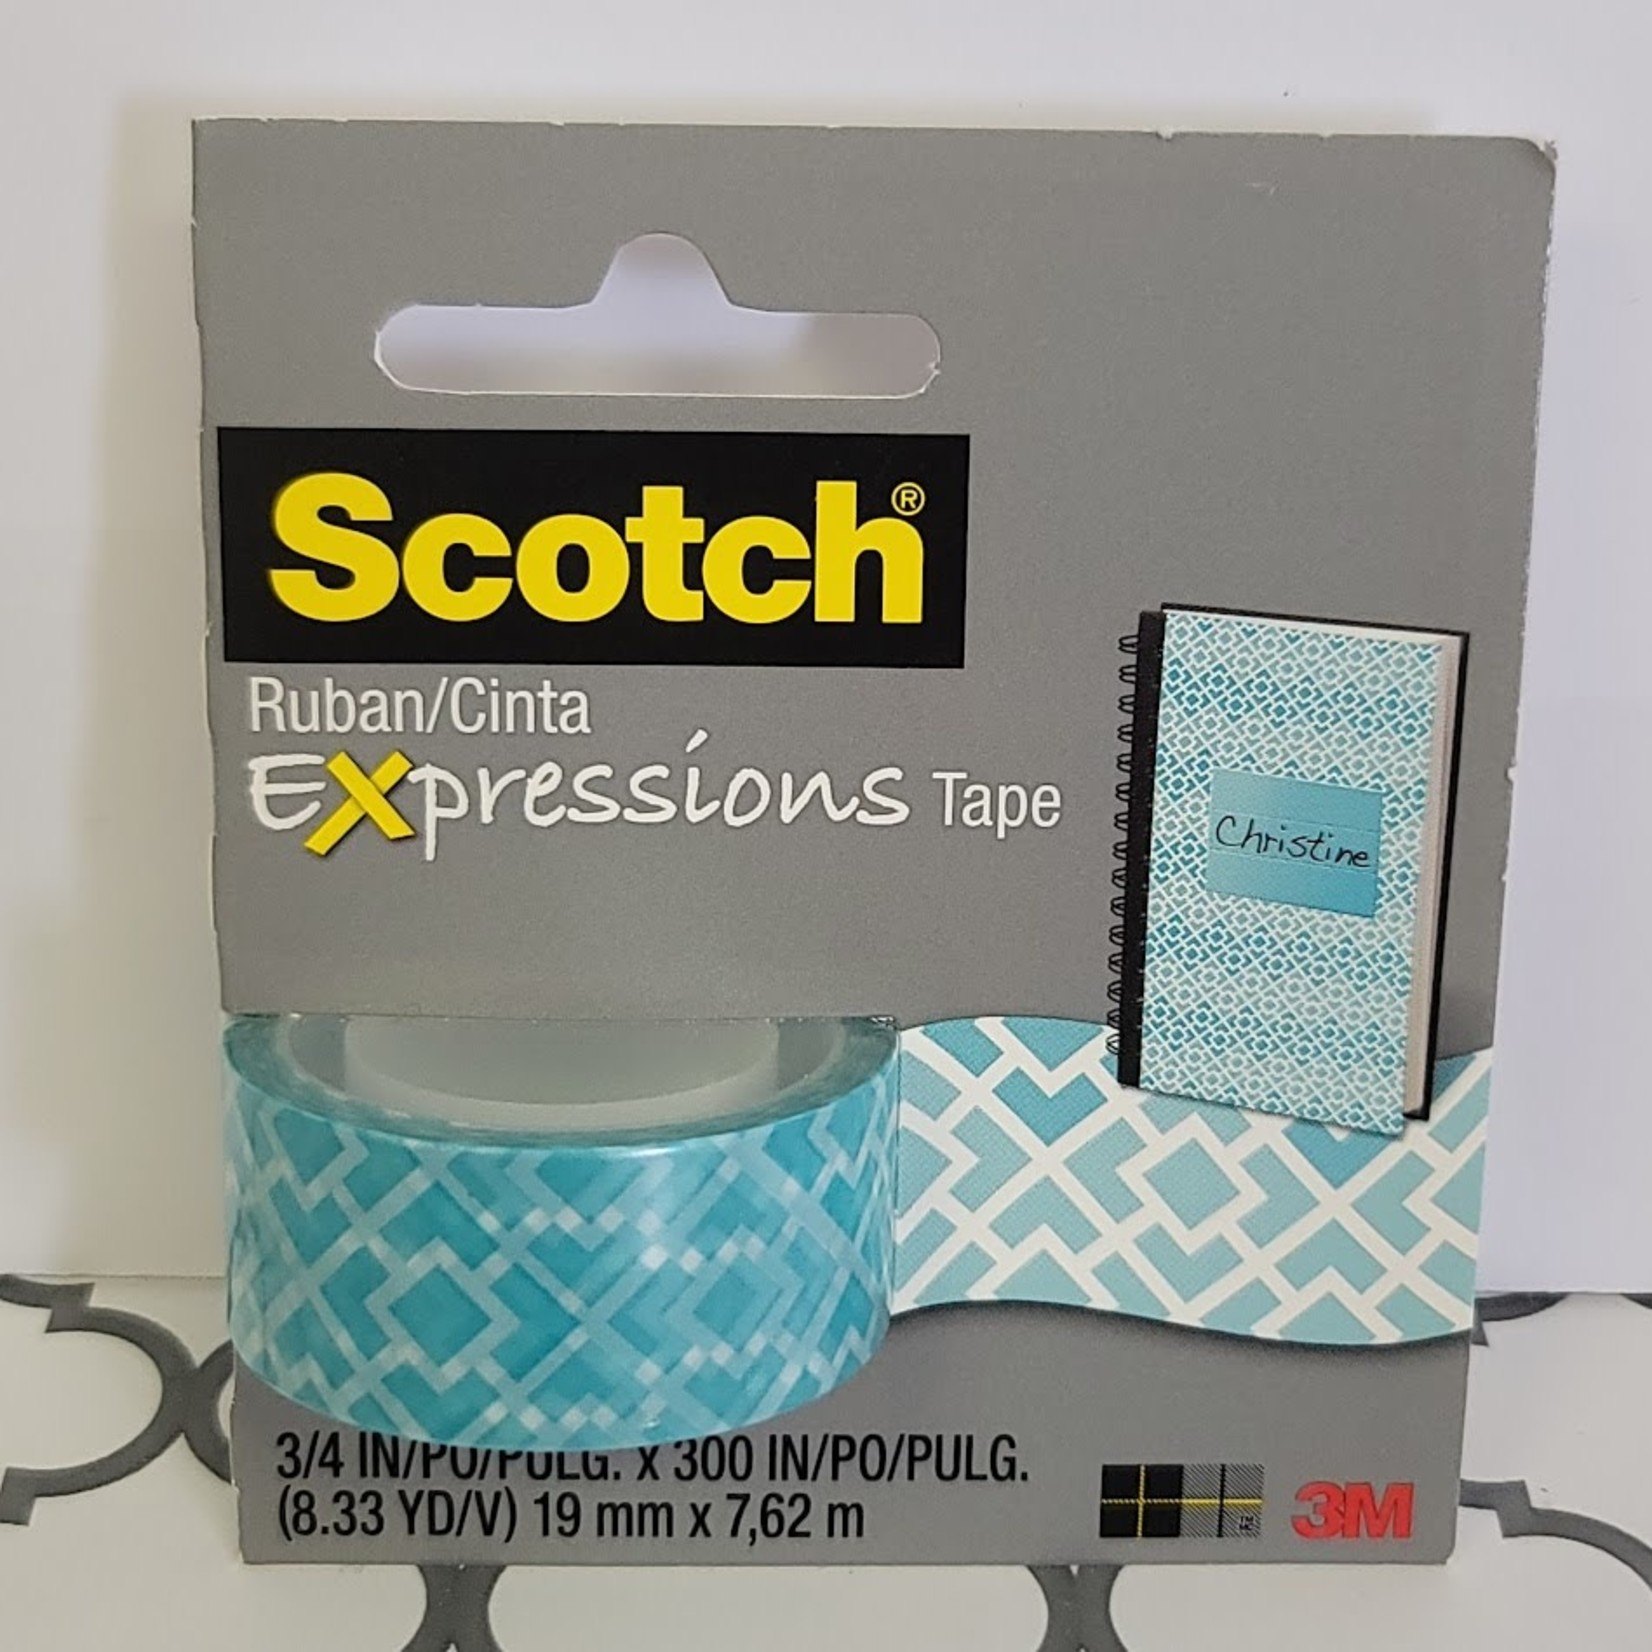 Scotch Expressions Tape - 3/4 inch x 300 inch